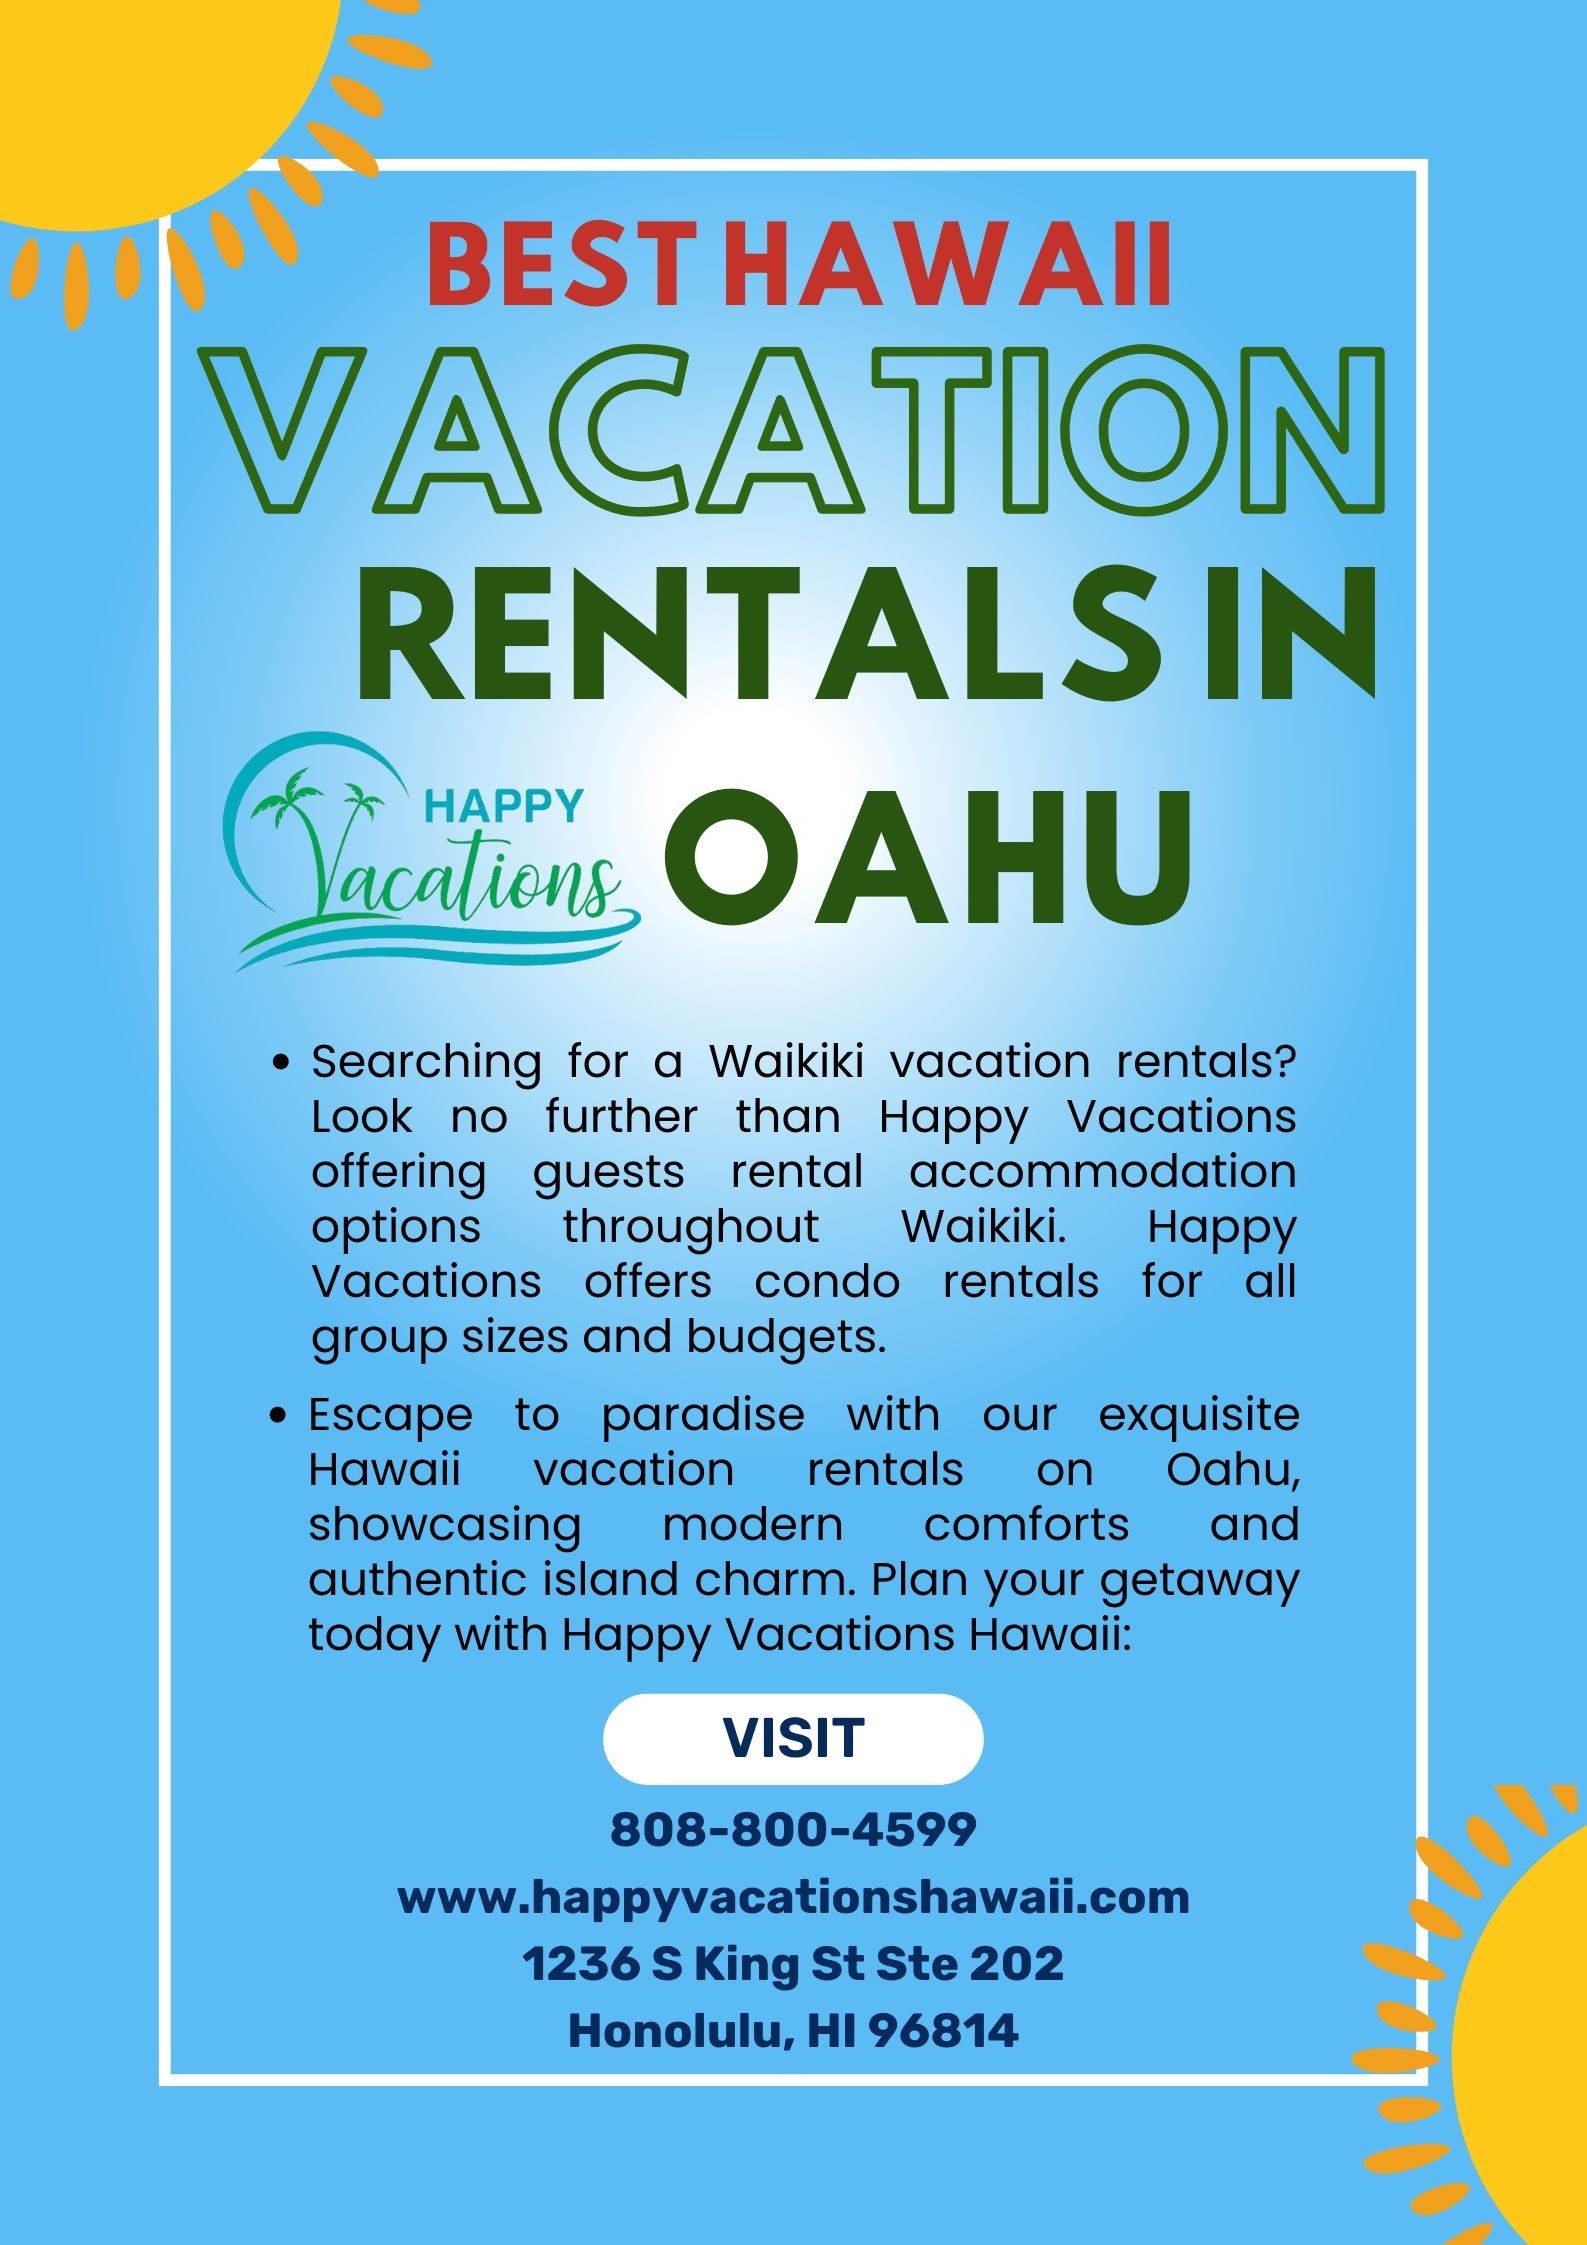 Best Hawaii Vacation Rentals in Oahu - Happy Vacations Hawaii